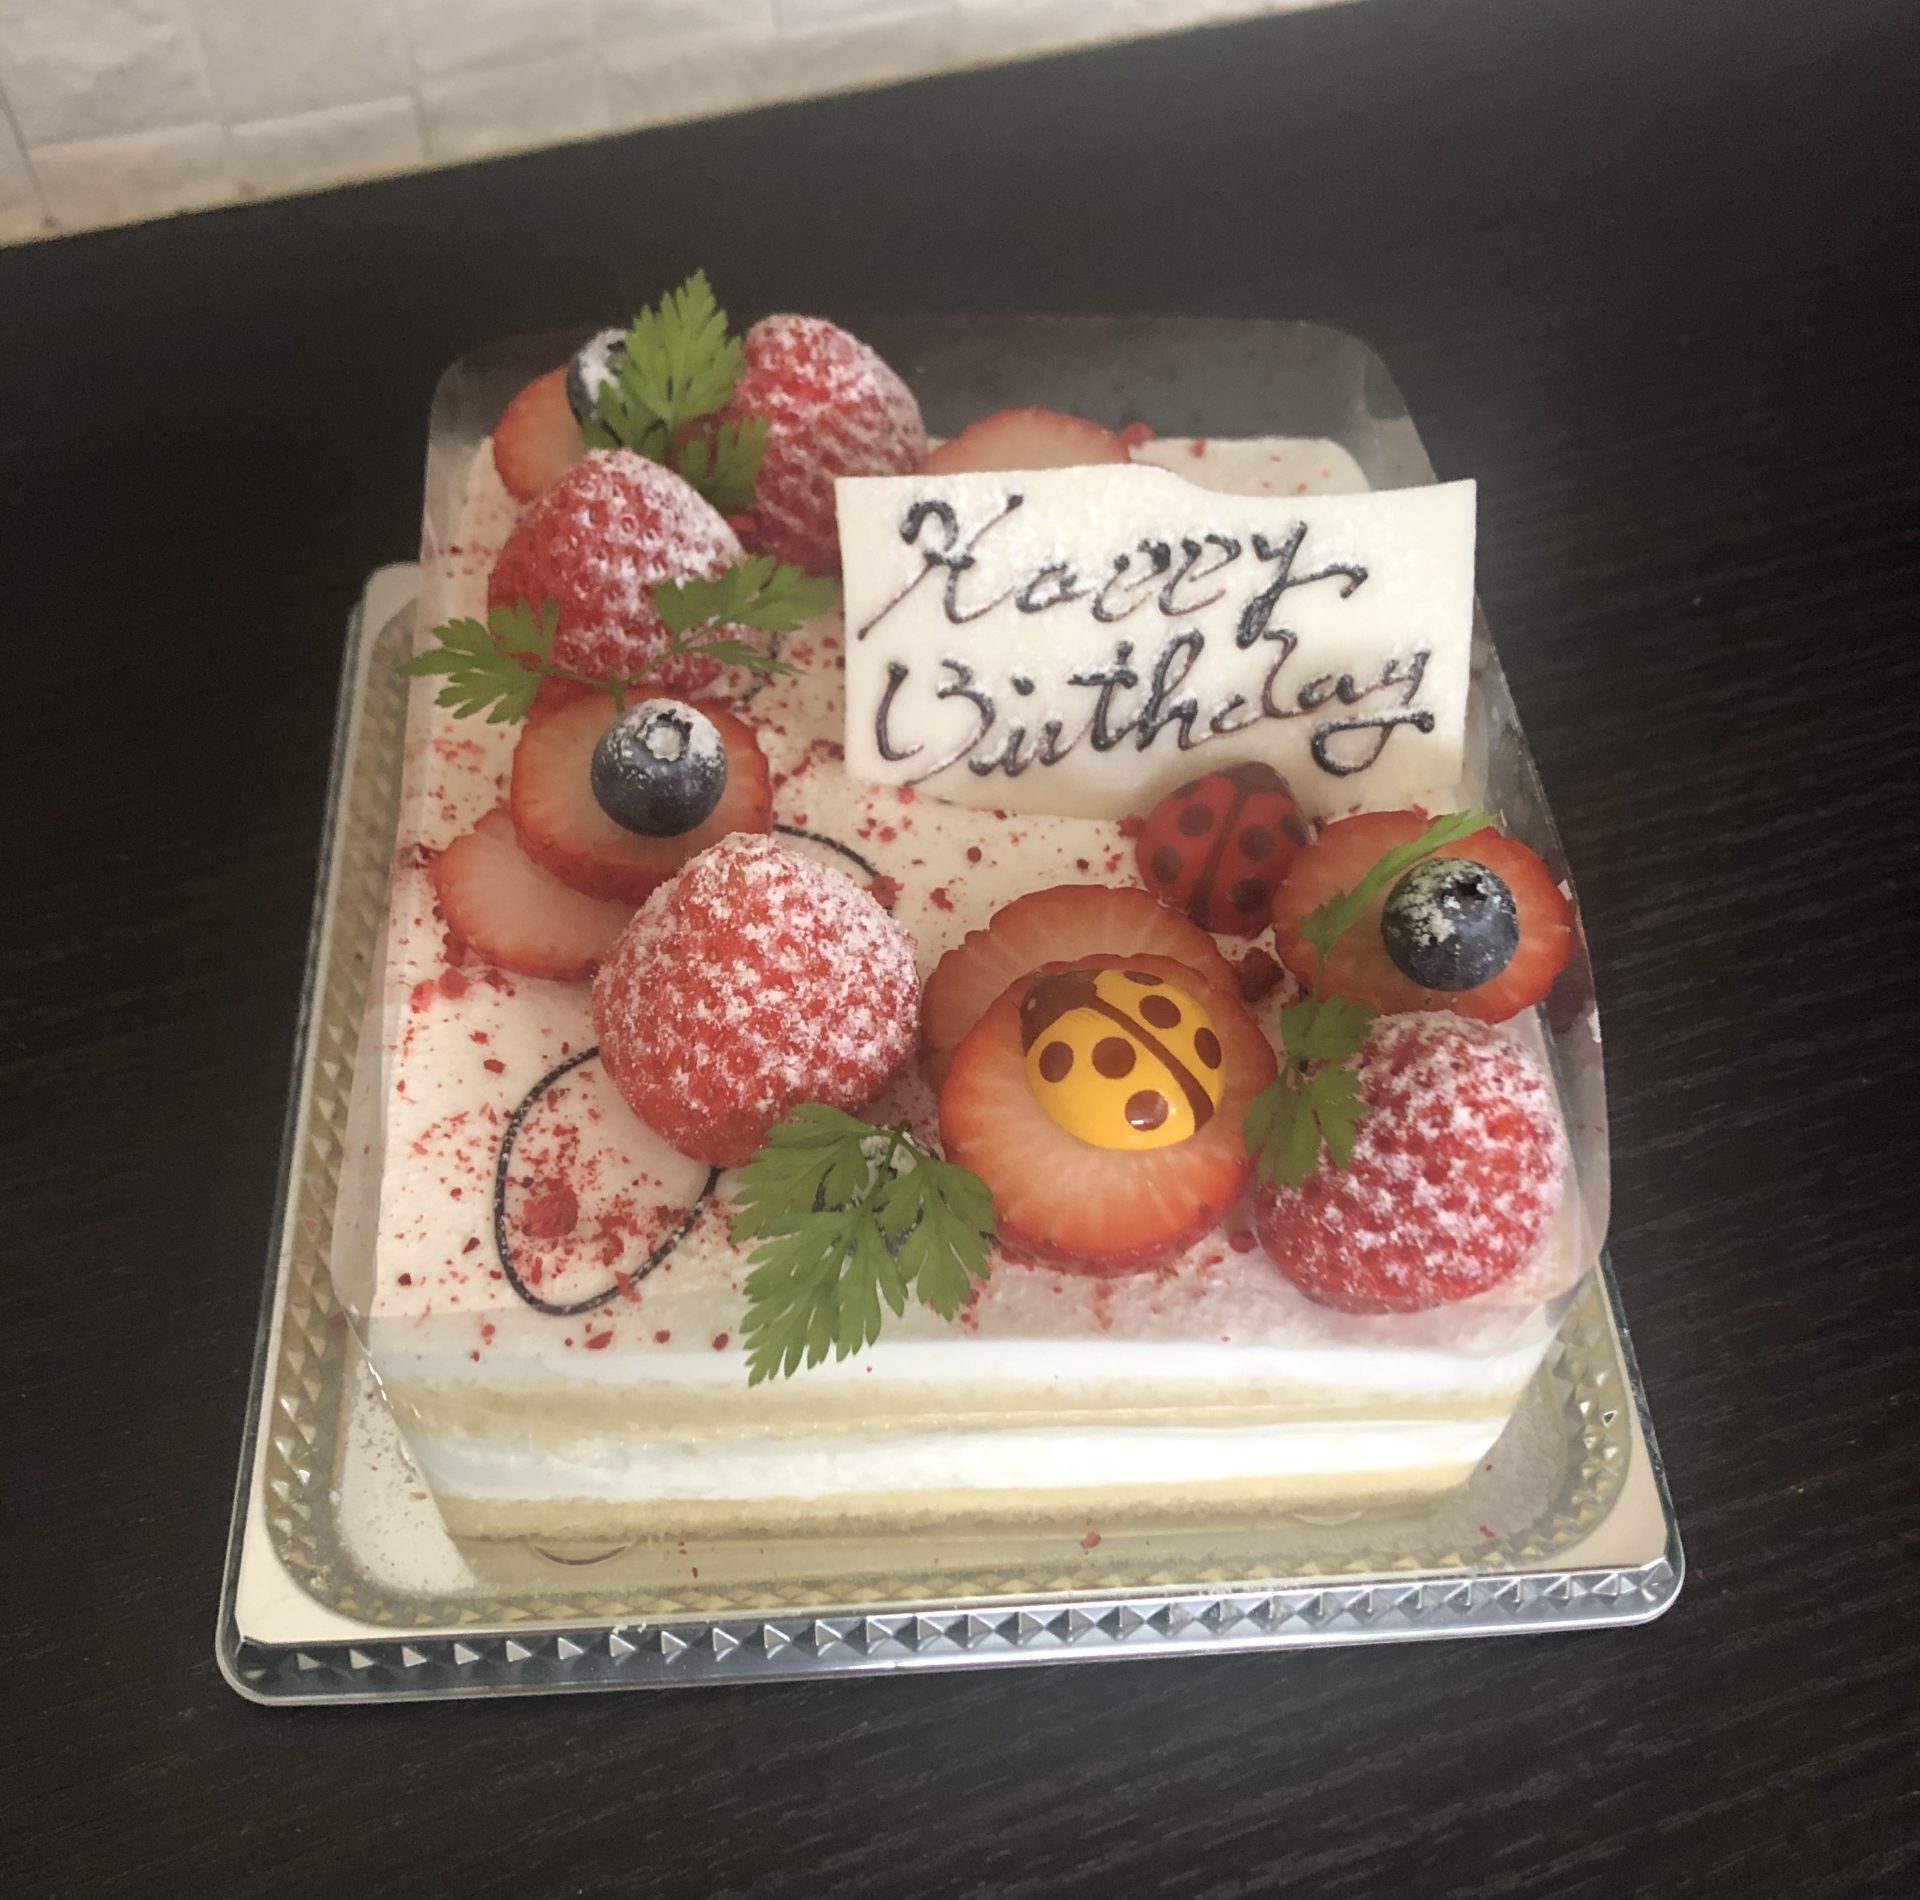 Happy Birthday 素晴らしい一日に Matilda Patisserie Chocolaterie 広島市安佐南区 西風新都の ケーキ チョコレート専門店 マチルダ